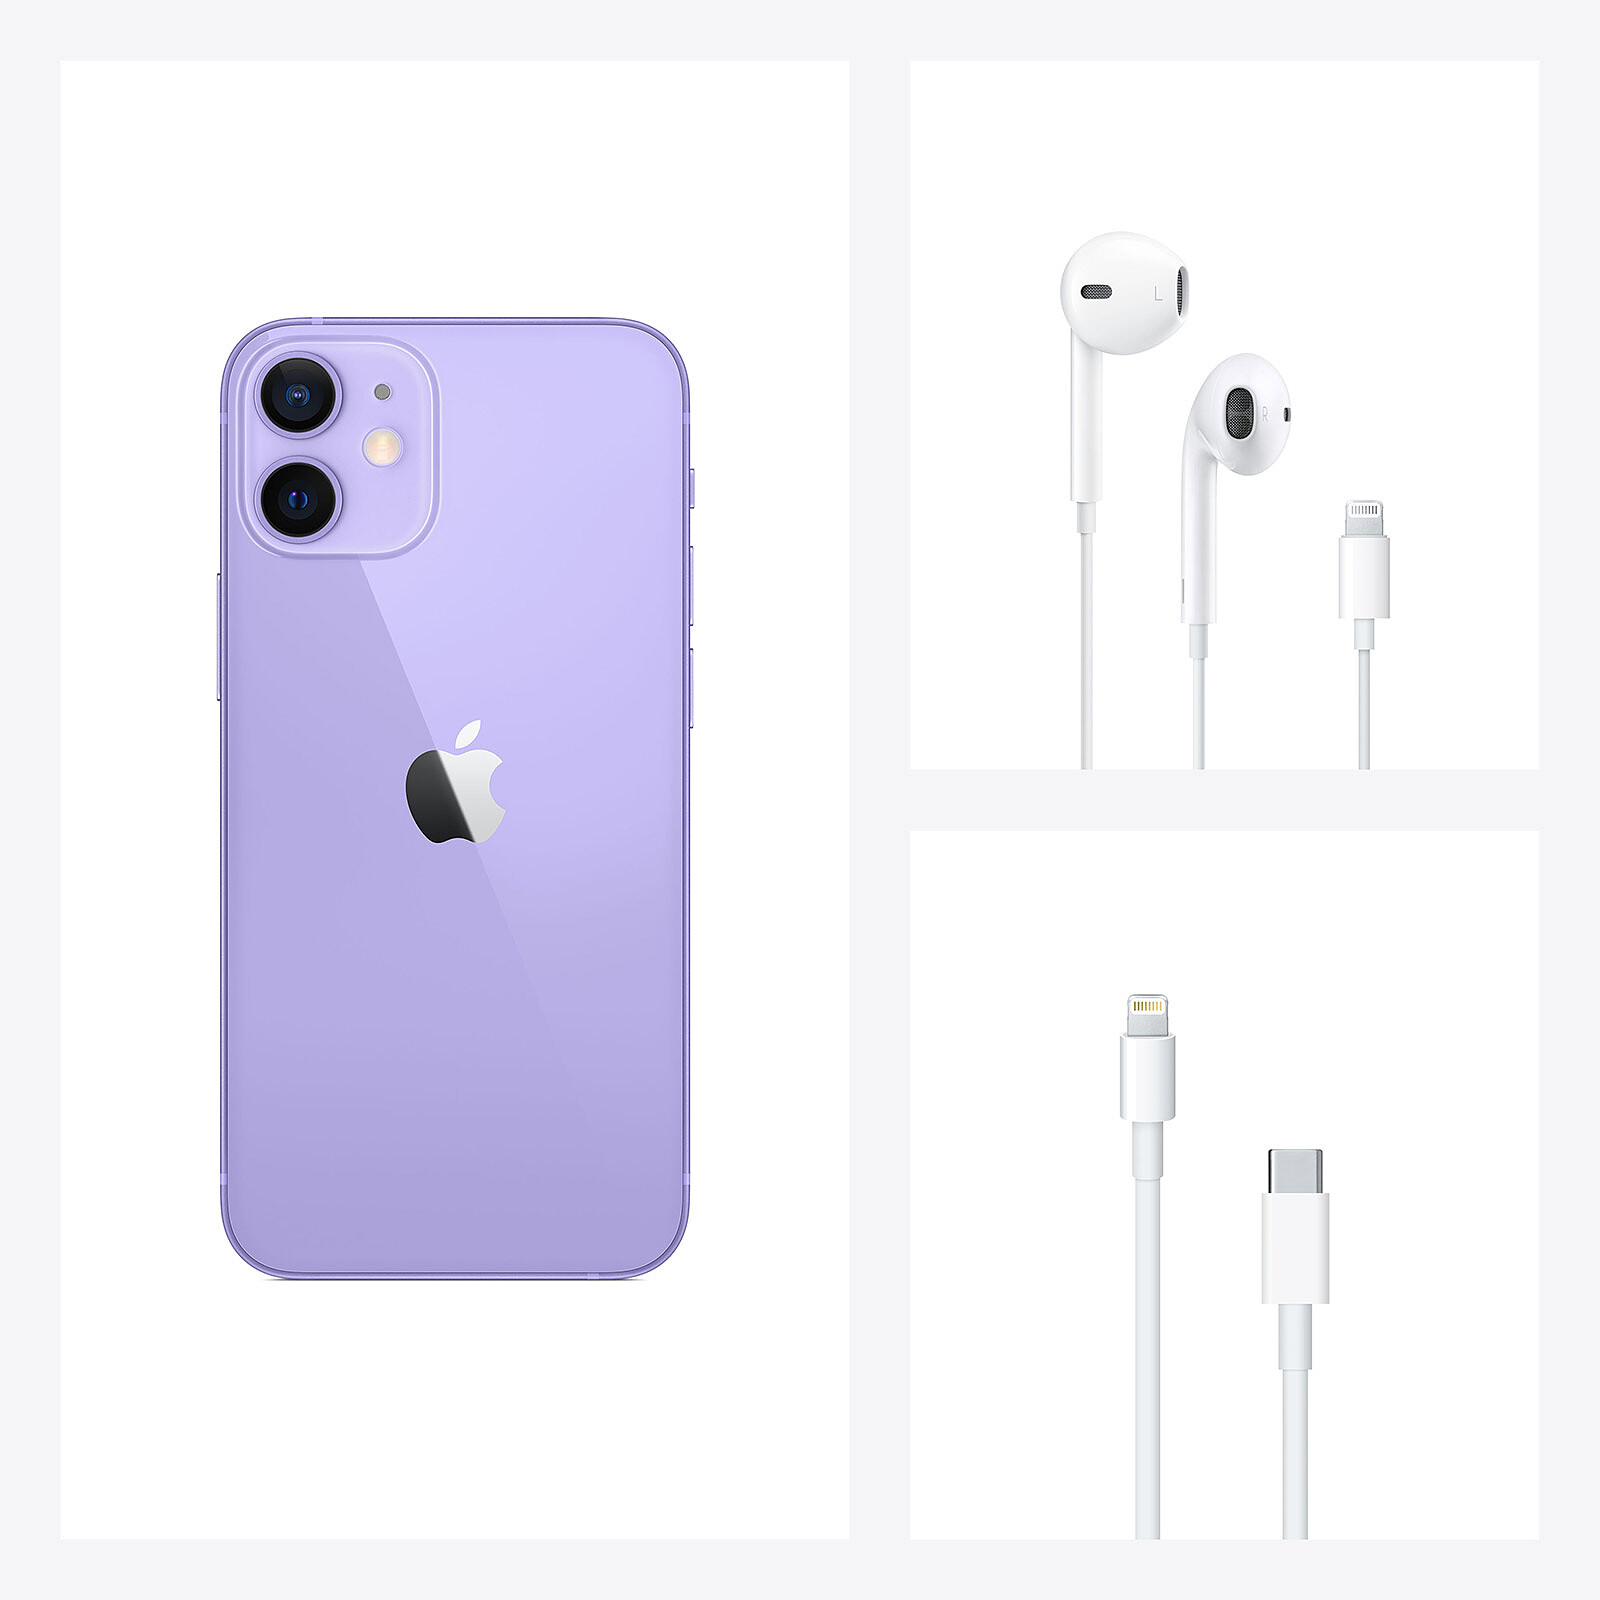 Apple iPhone 12 mini 64 GB Purple - Mobile phone